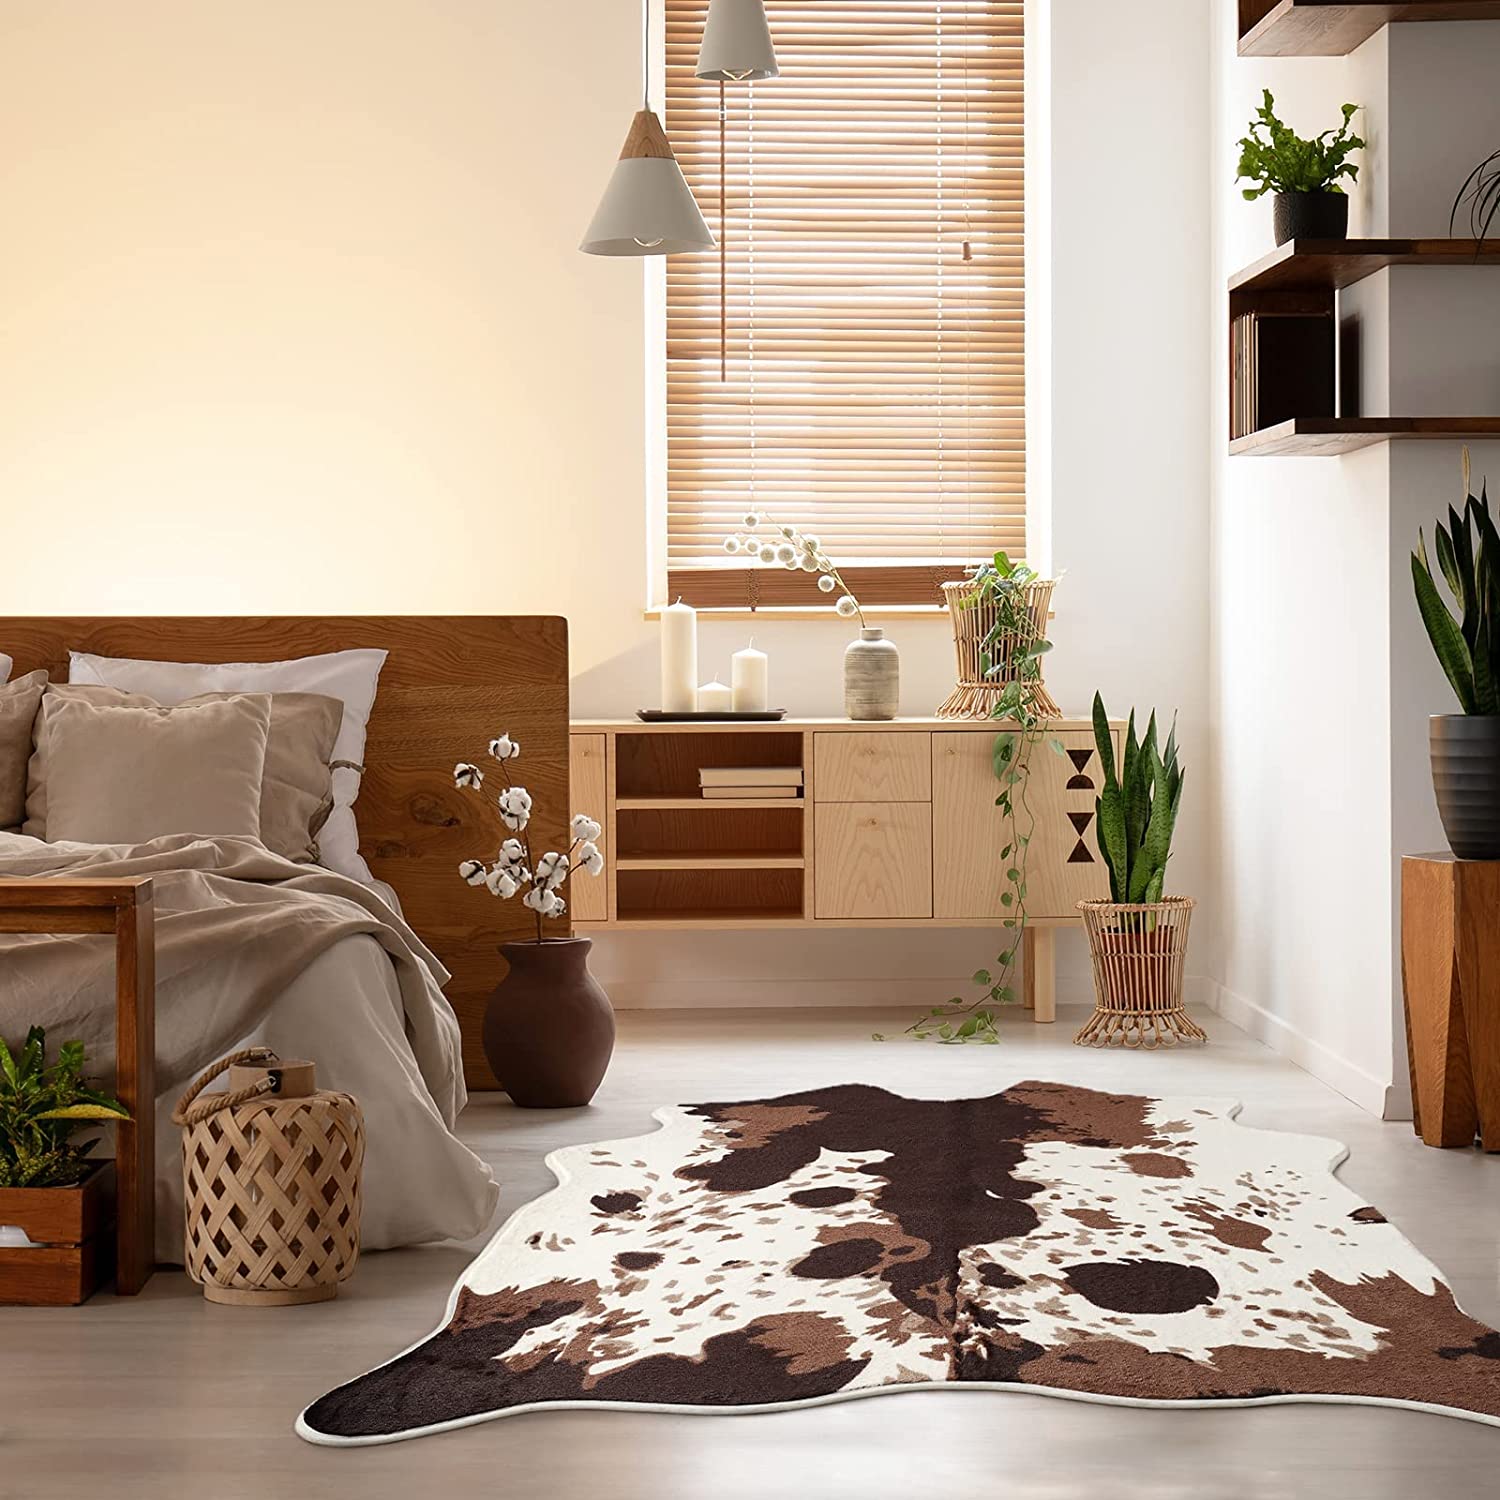 NOAHAS Zebra Print Rug Faux Fur Hide for Living Room Bedroom Cute Animal Print Carpet Western Home Decor Soft Skin Area Rug